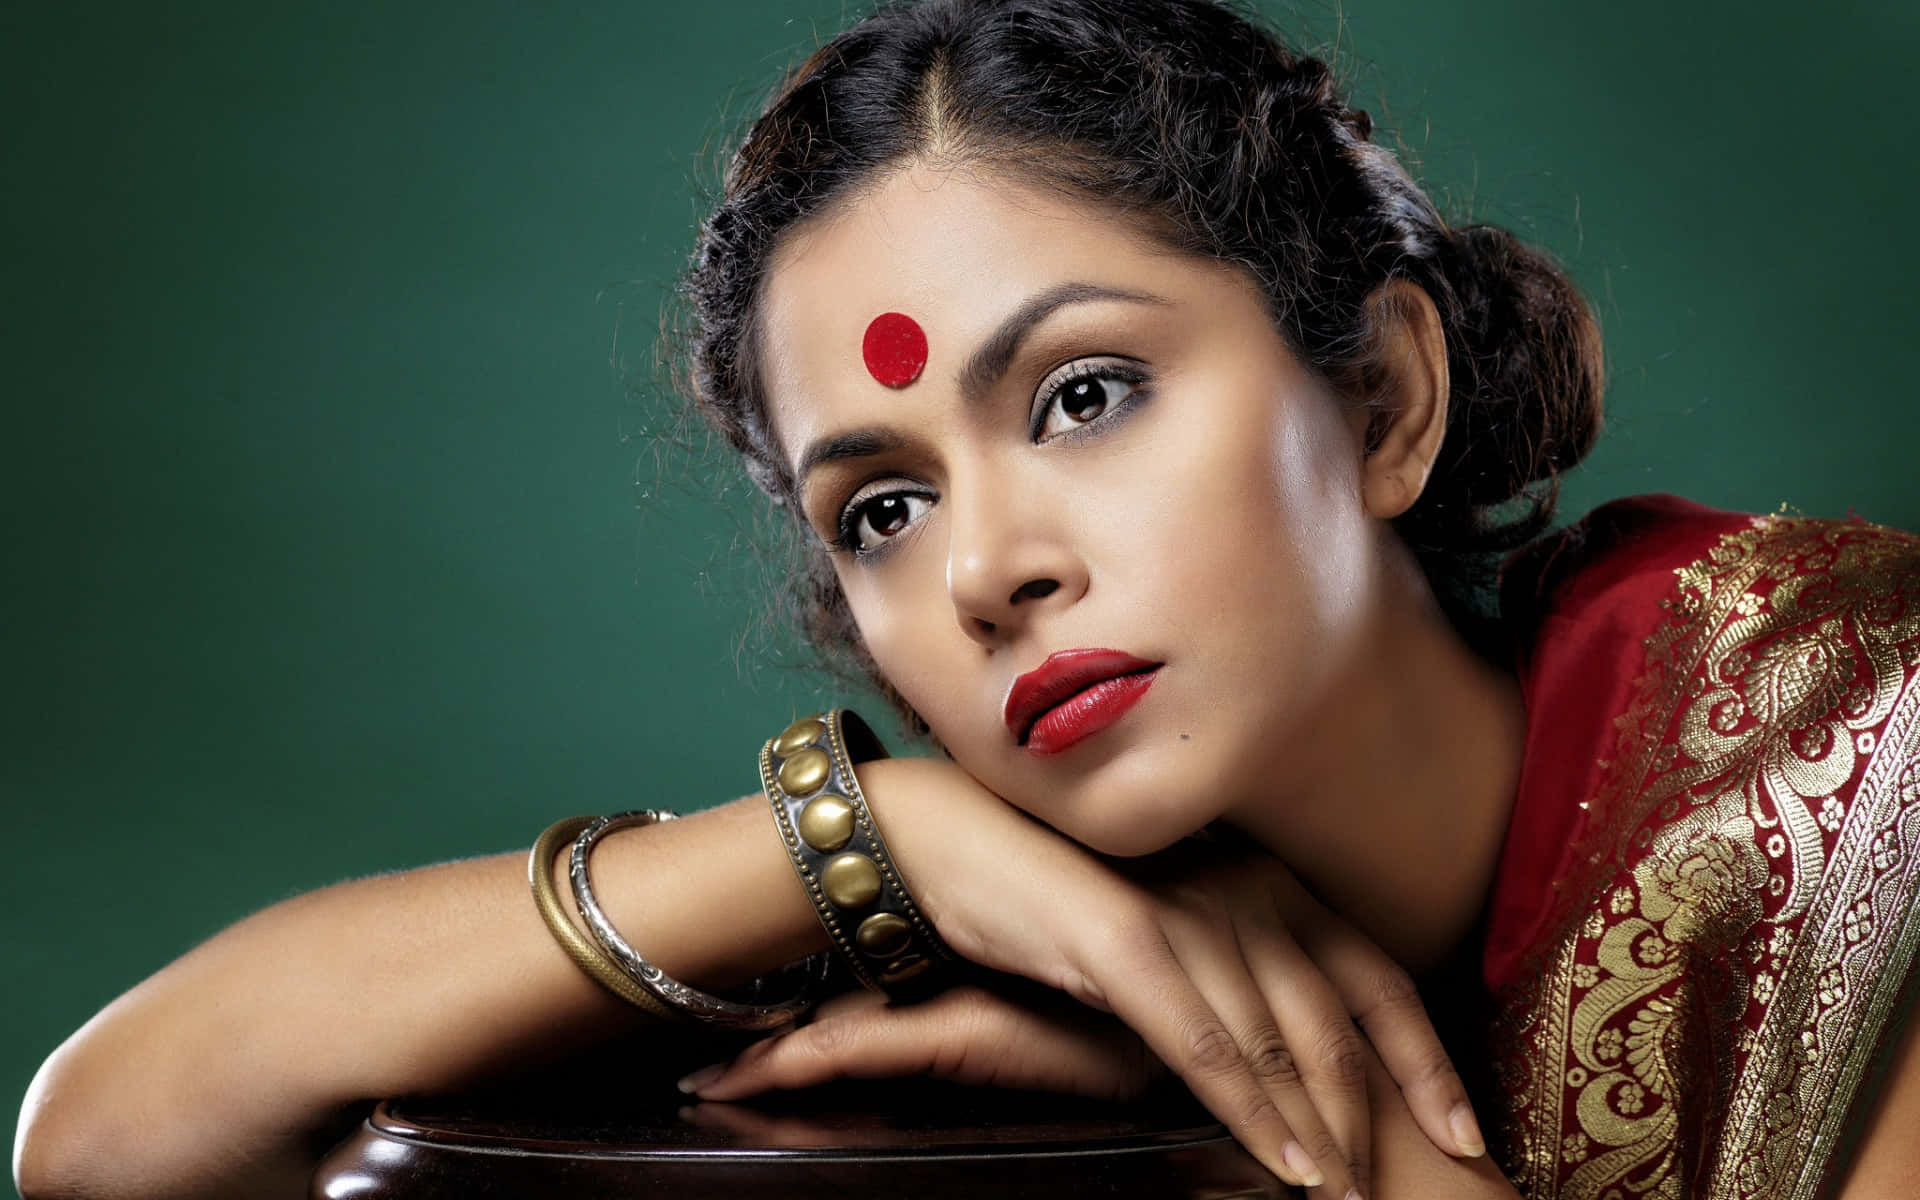 Majestic Indian Woman Tight Shot Wallpaper